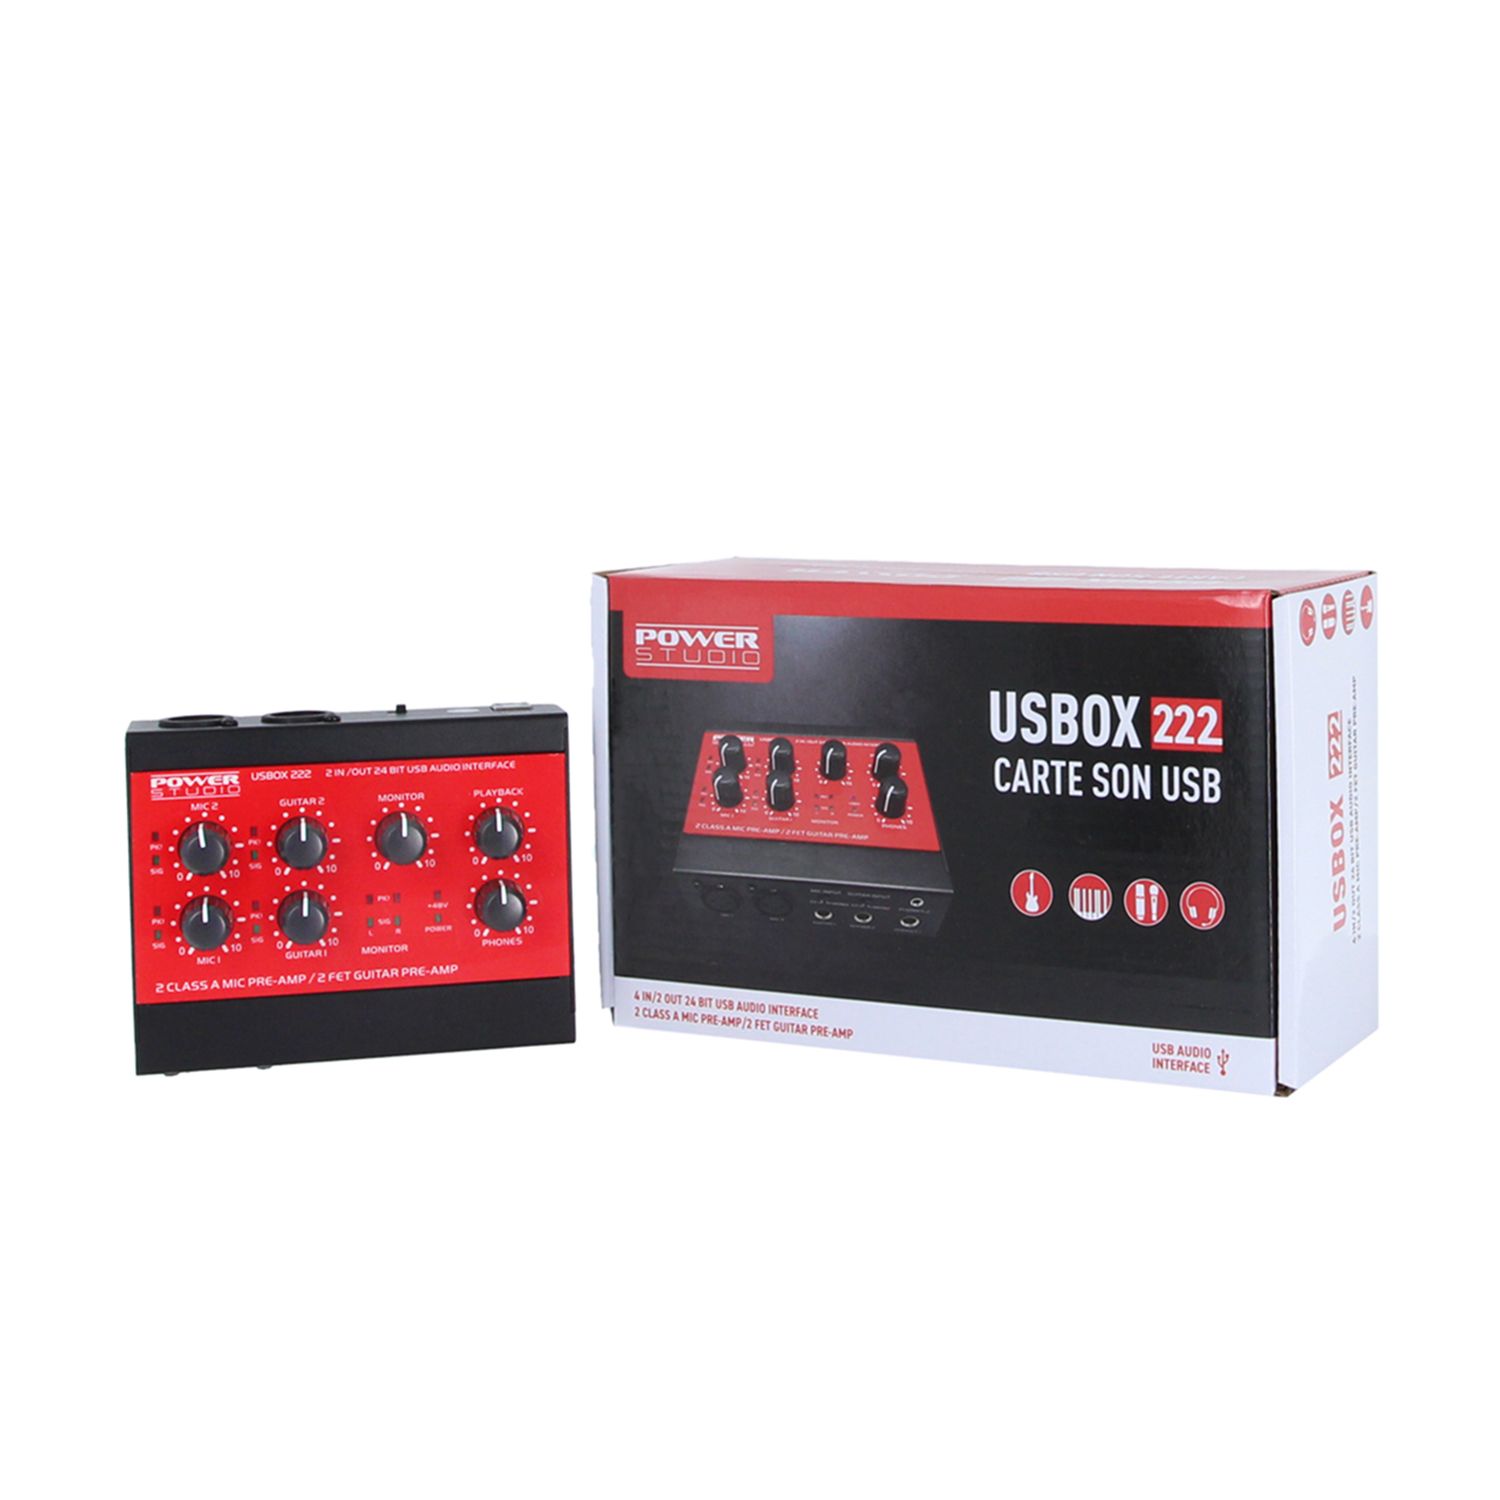 Power Studio Usbox 222 - Interface de audio USB - Variation 4